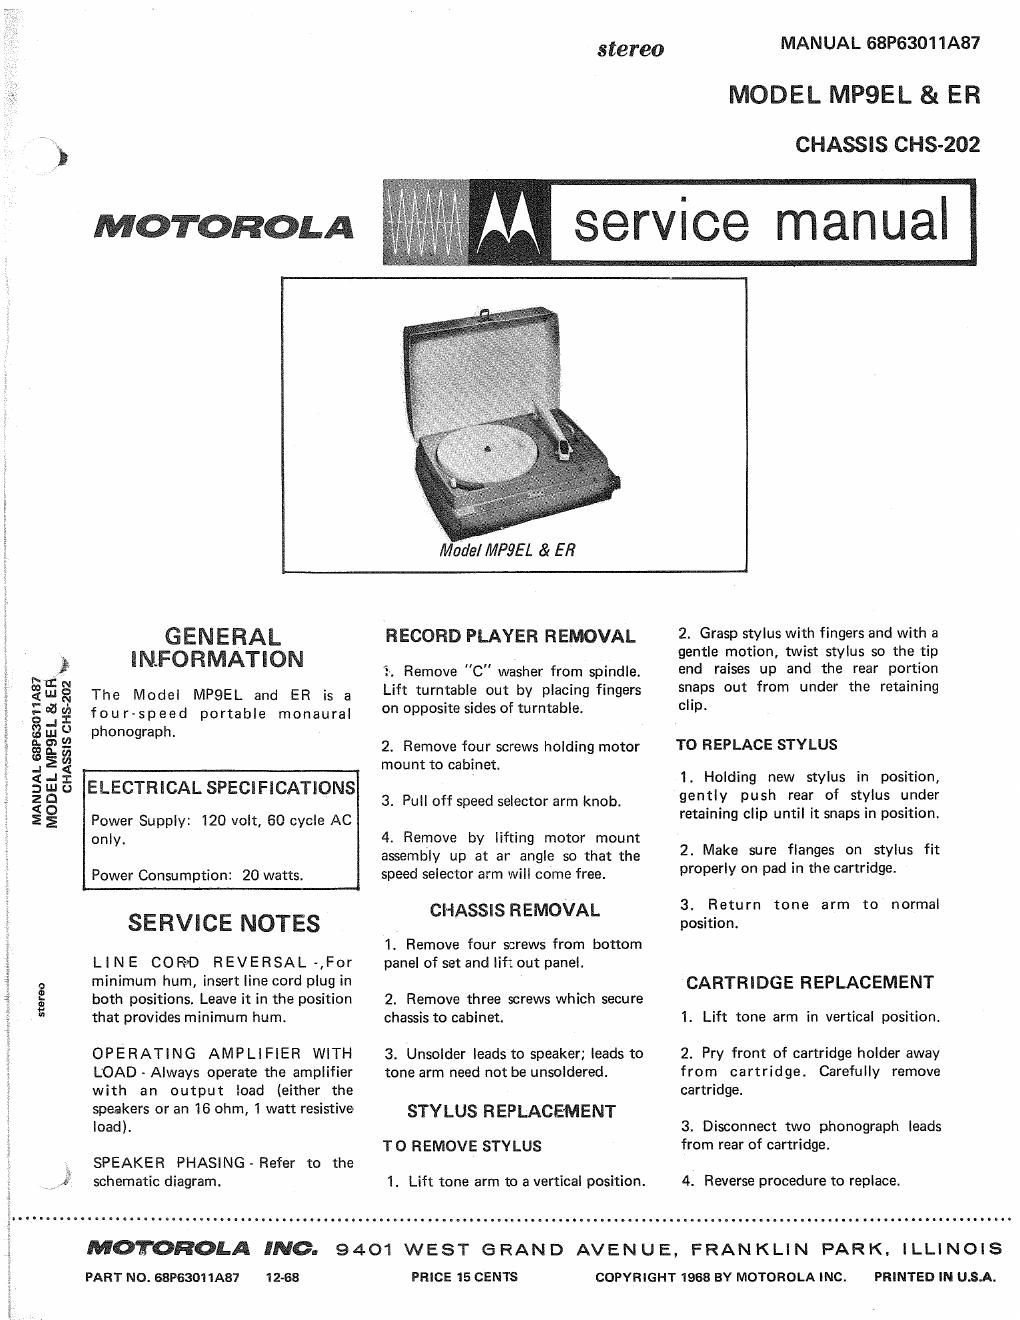 motorola mp 9 er service manual